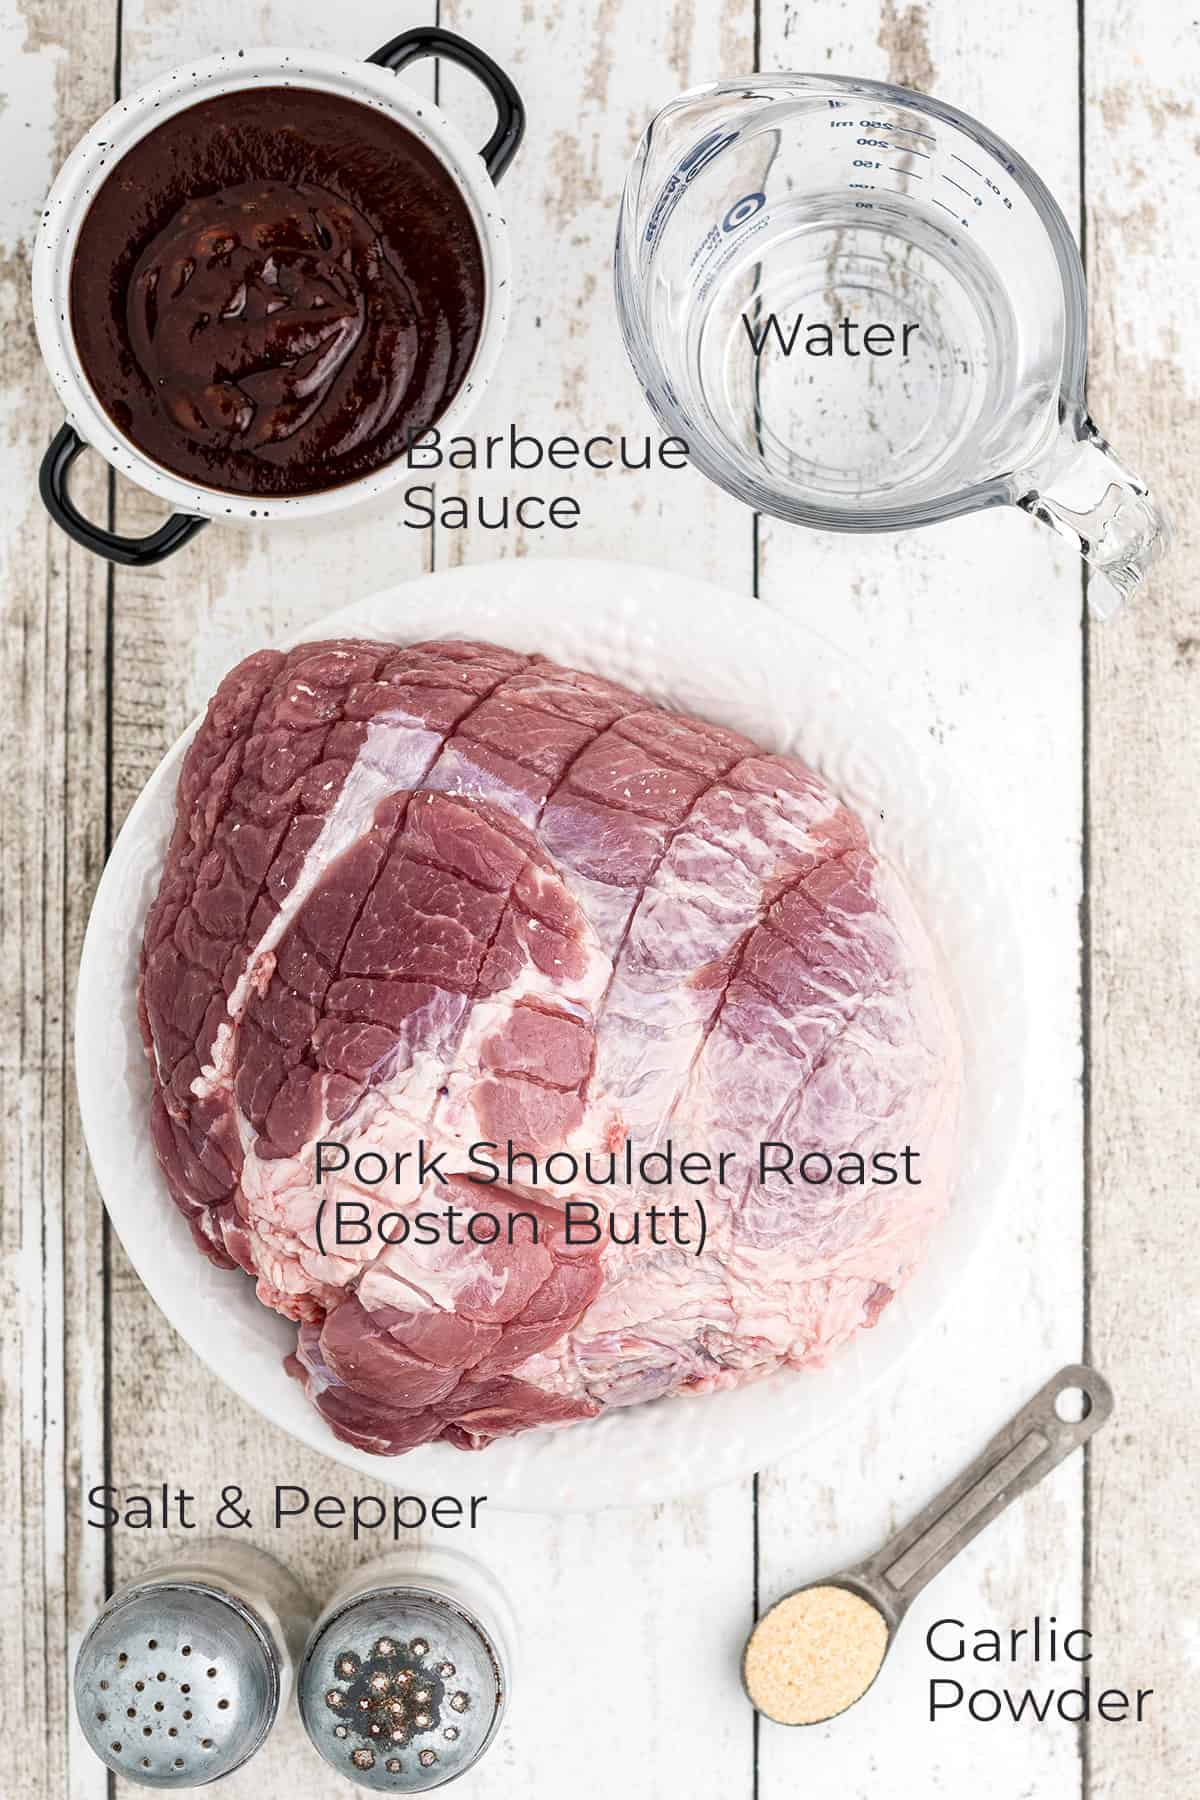 Ingredients for making pulled pork.